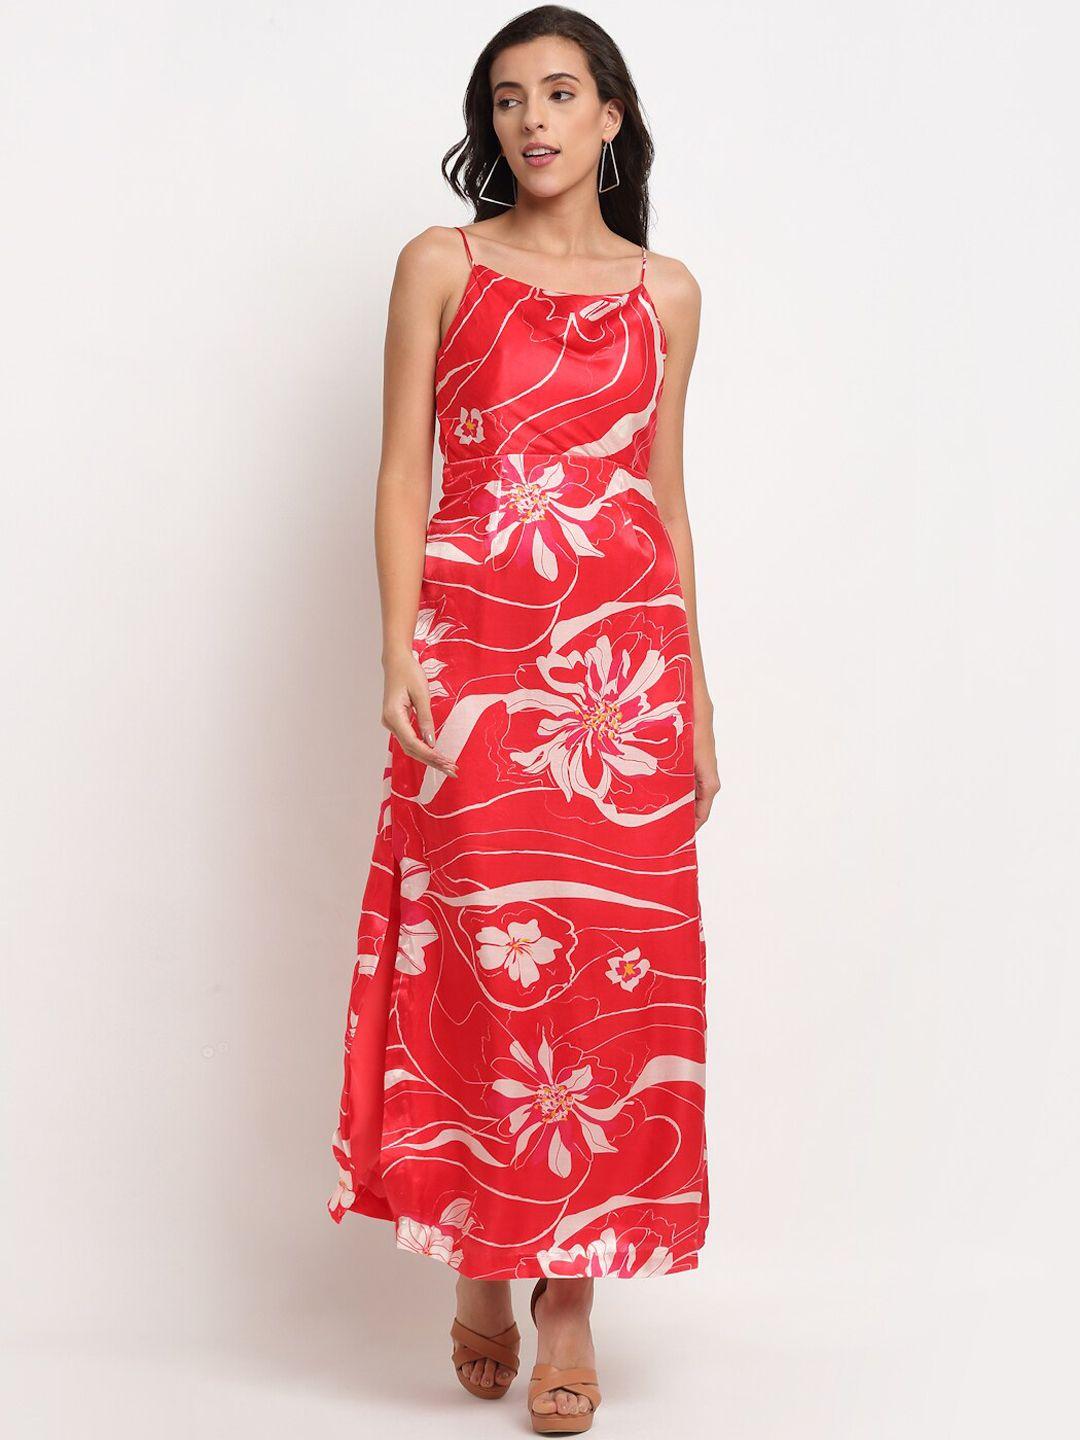 ewoke-red-&-white-floral-maxi-dress